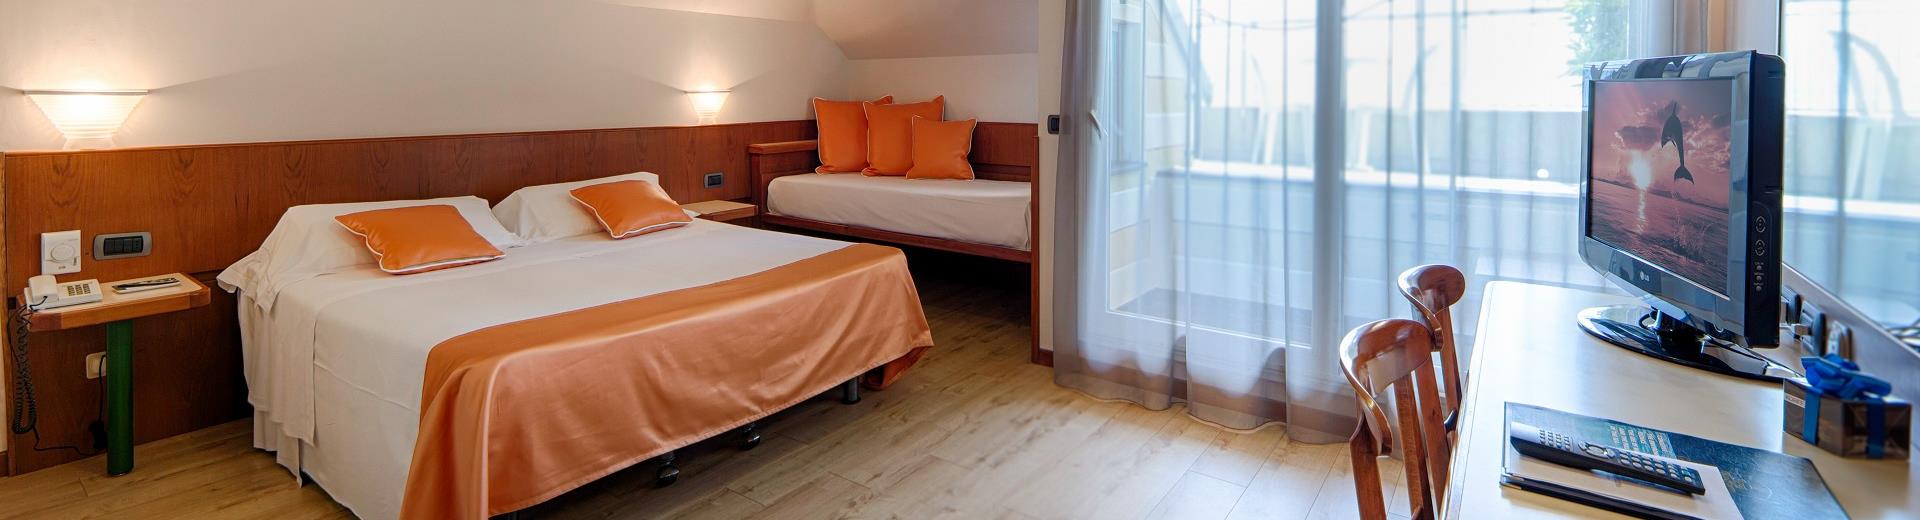 Discover the rooms of the Hotel Regina Elena Santa Margherita Ligure